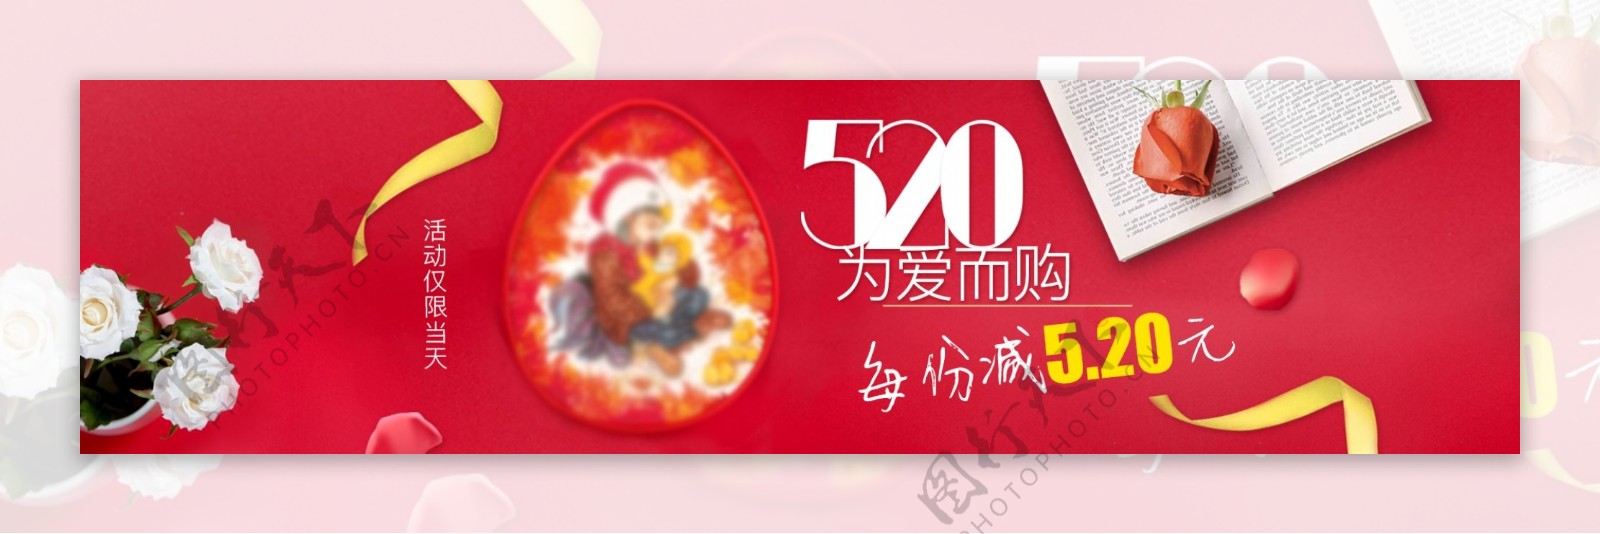 电商淘宝520情人节活动banner